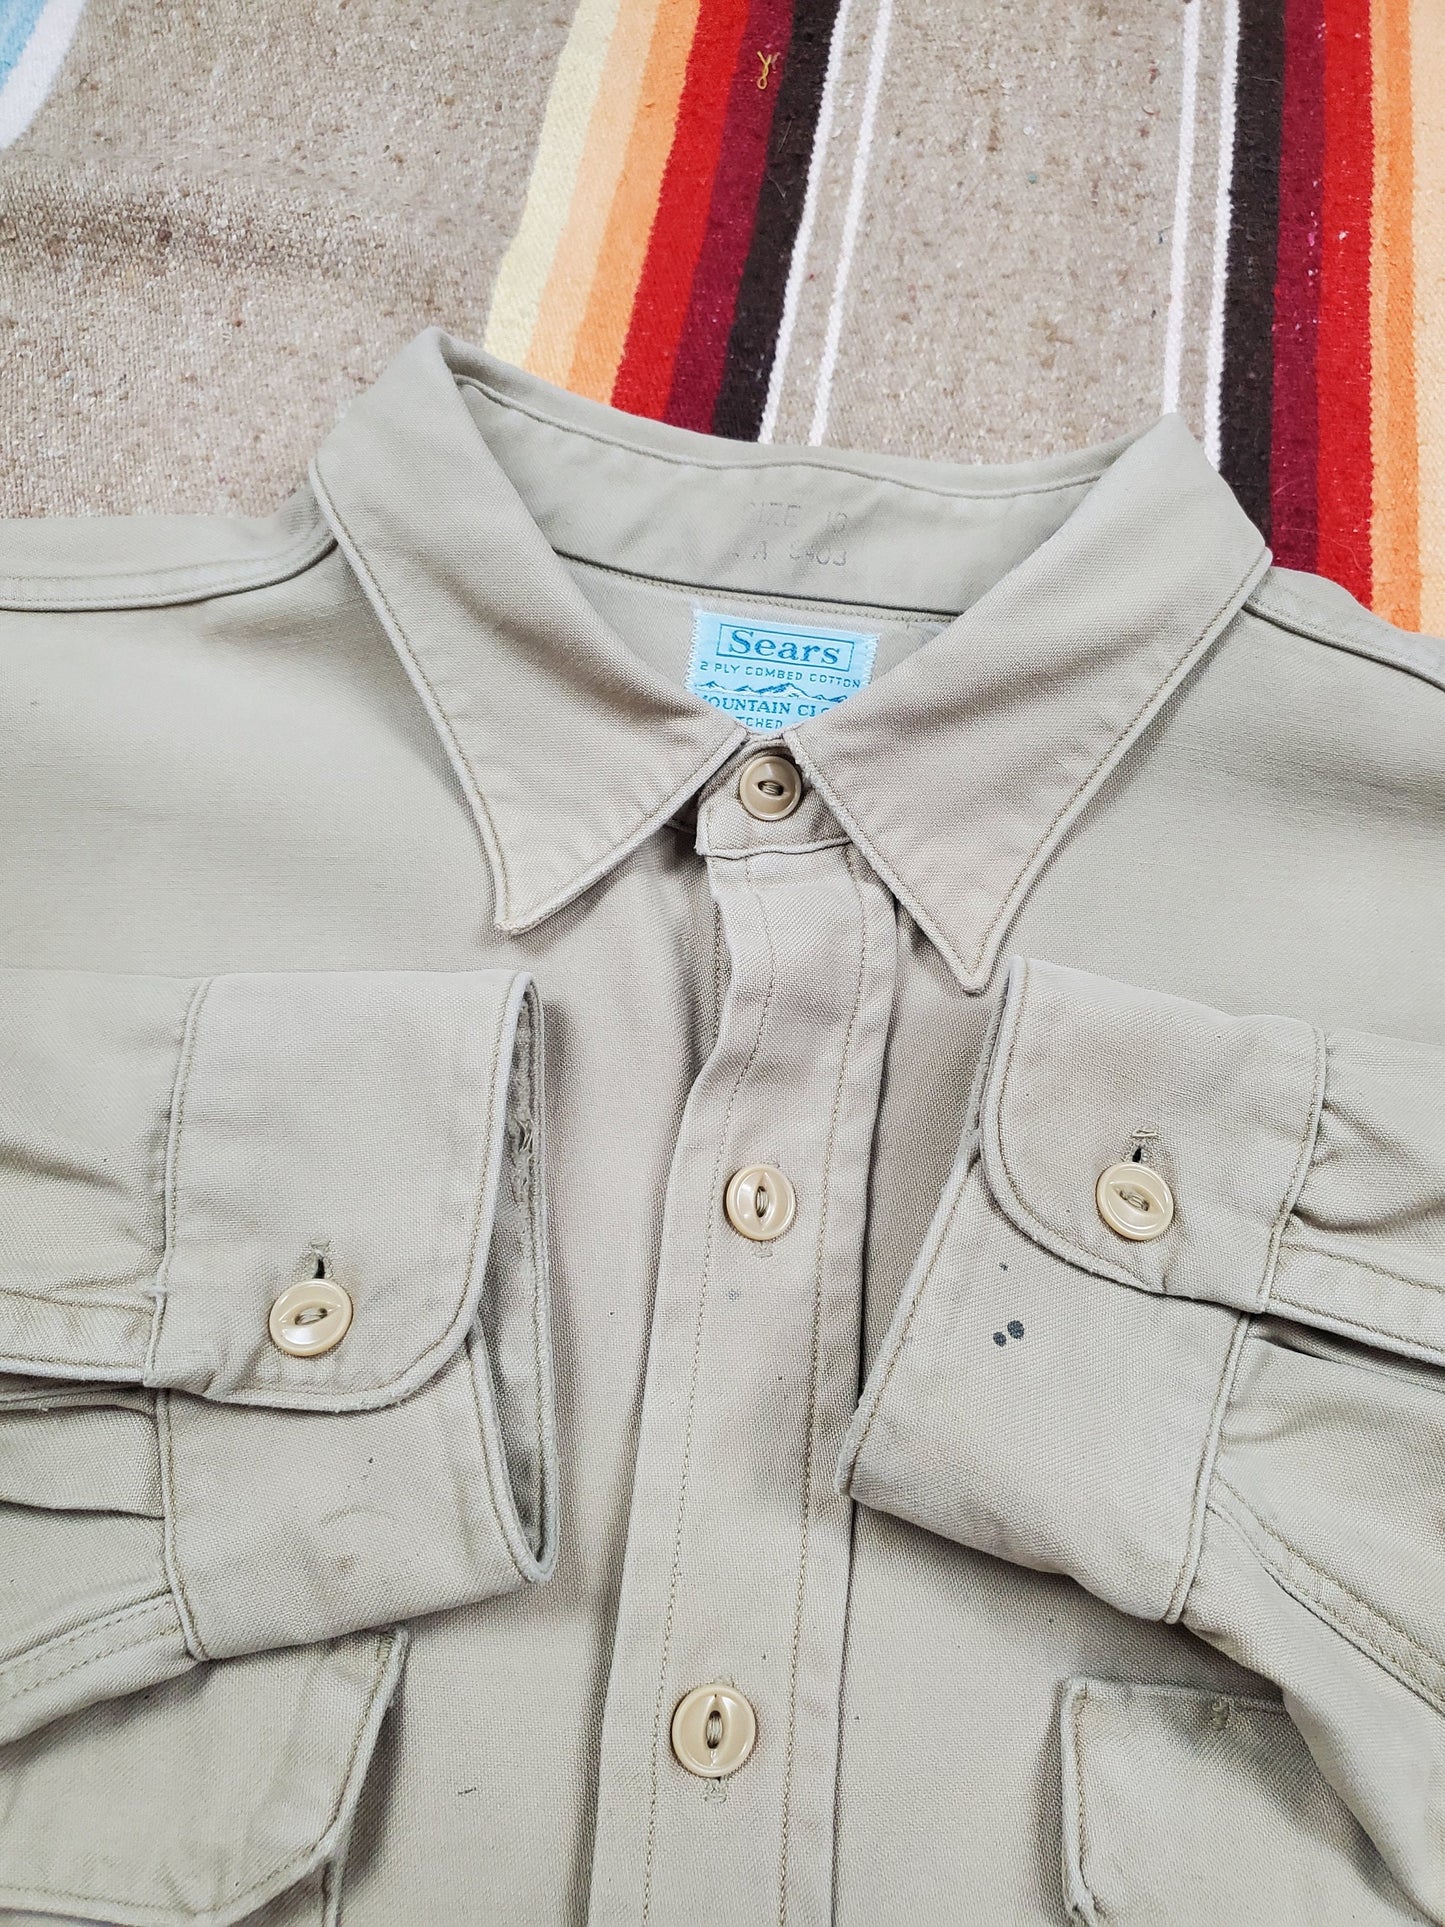 1960s Sears Roebucks Mountain Cloth Shirt Size XL